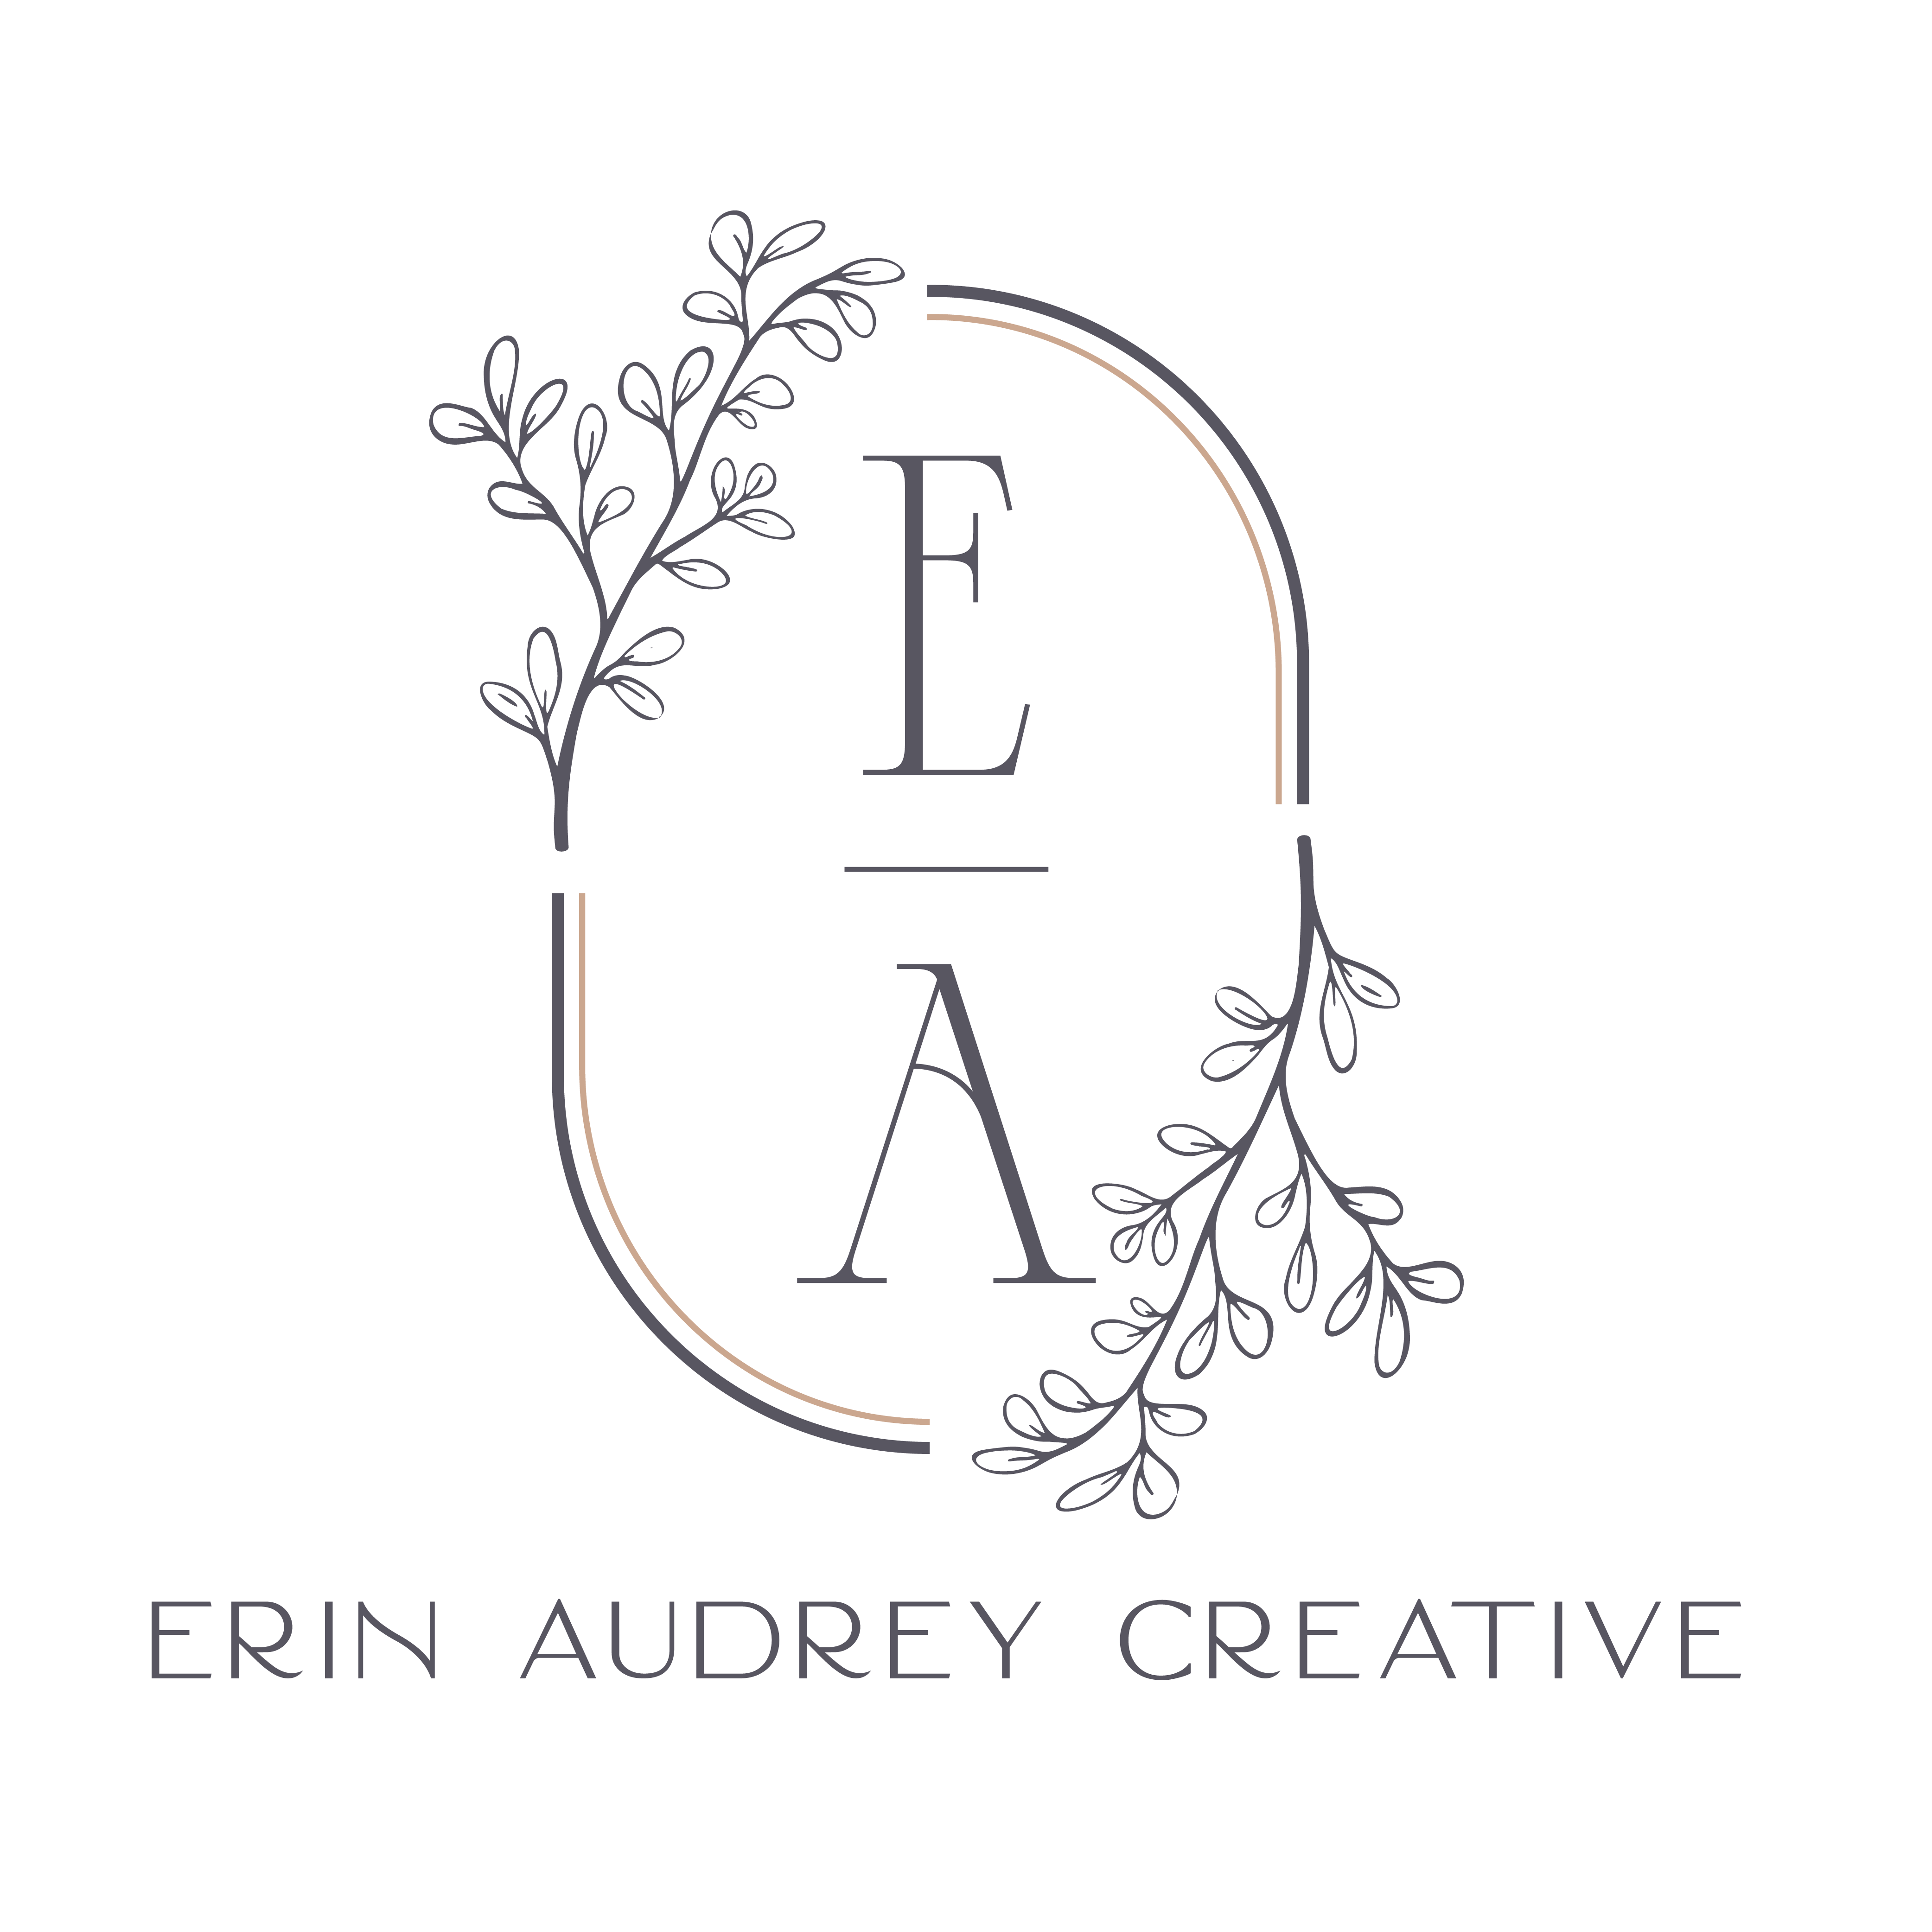 Erin Audrey Creative